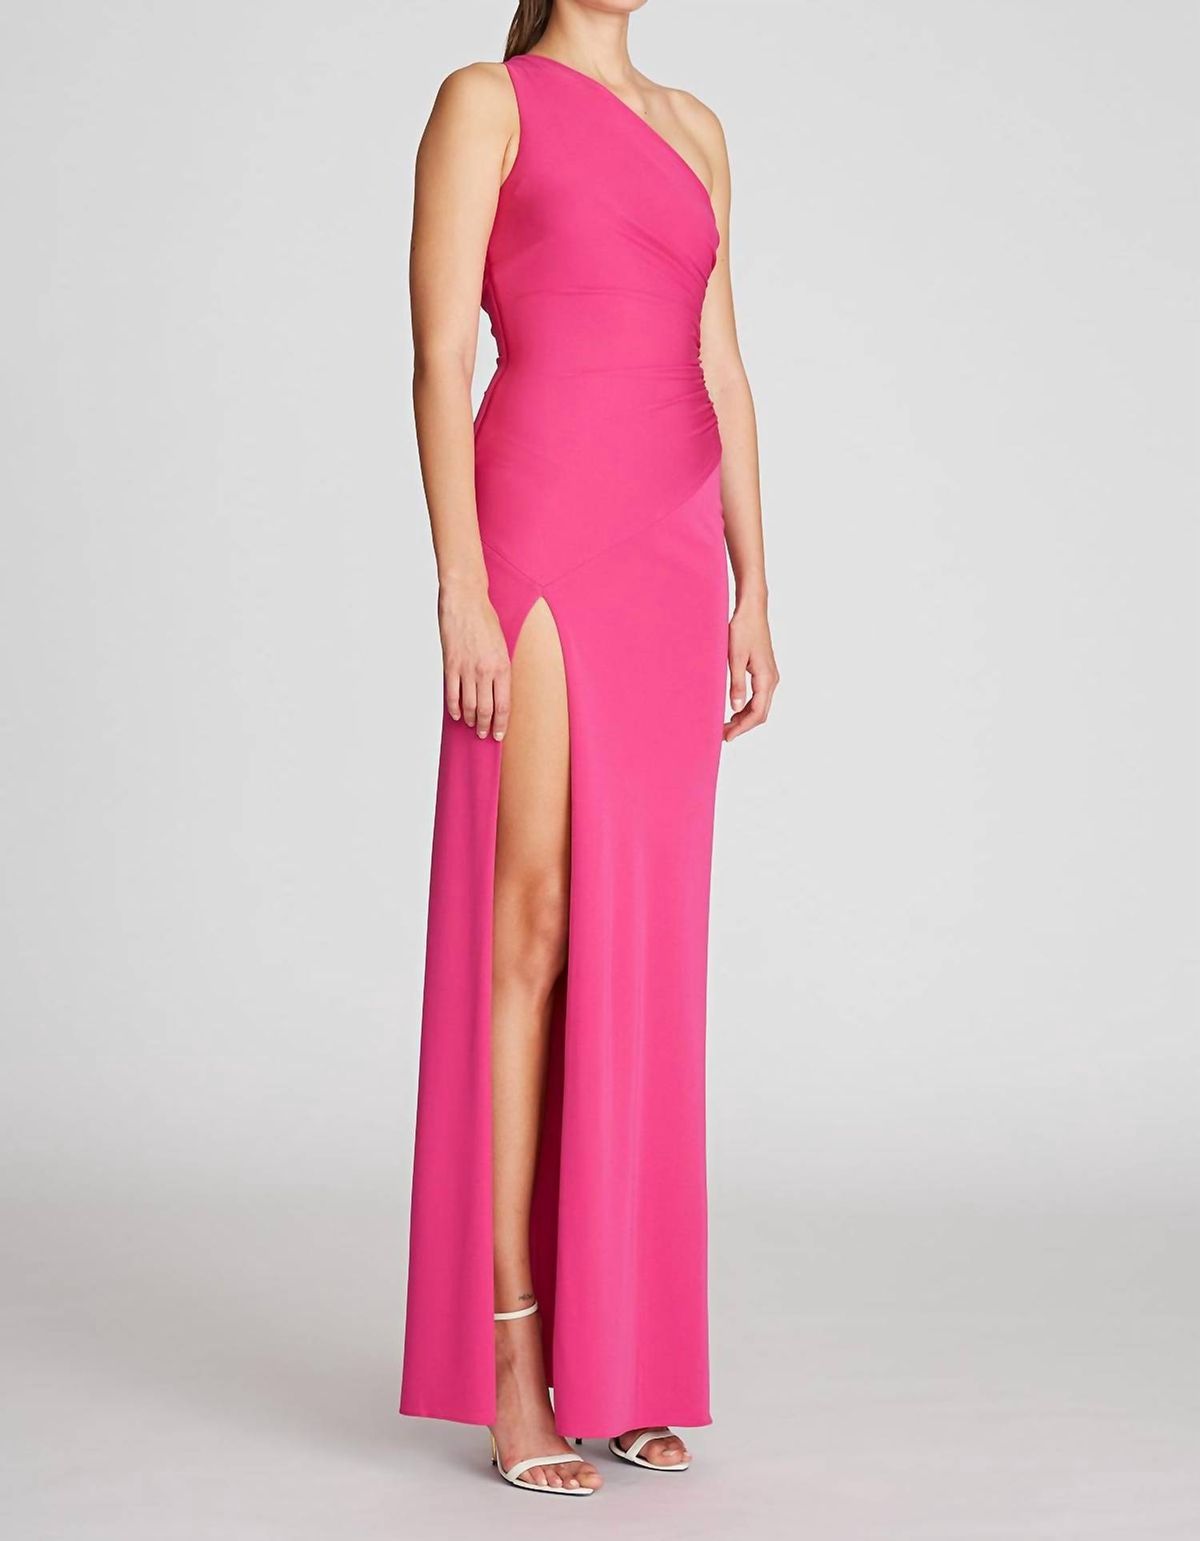 Style 1-3916124304-649 HALSTON HERITAGE Size 2 One Shoulder Pink Side Slit Dress on Queenly